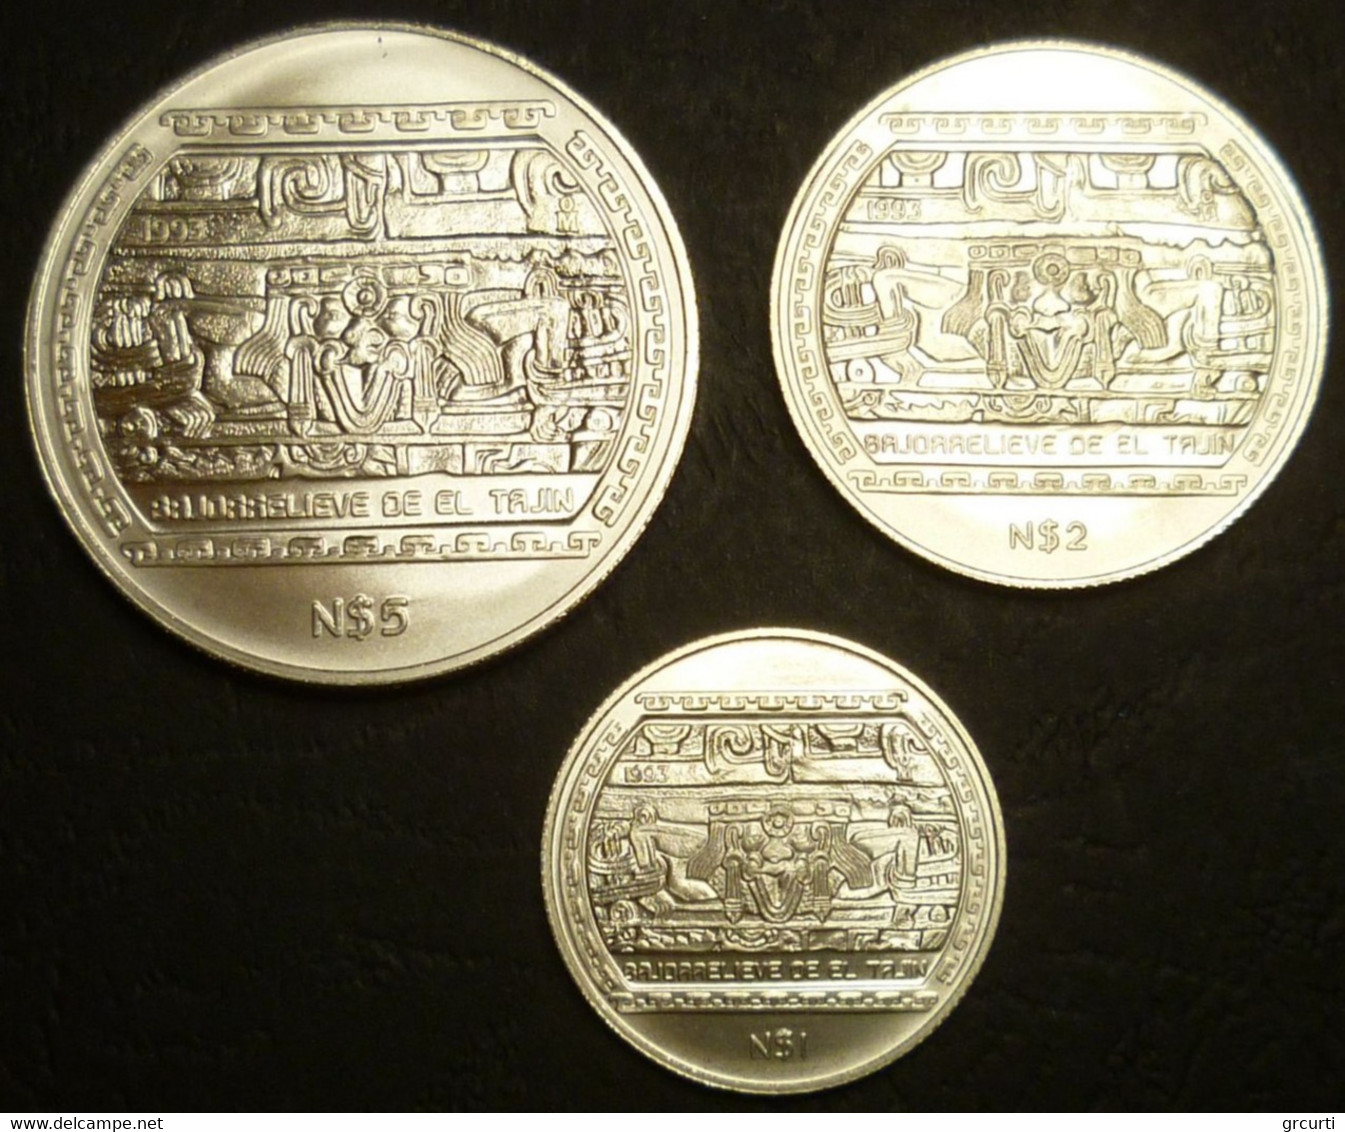 Messico - 1 + 2 + 5 Nuevos Pesos 1993 - Serie Precolombiana - Veracruz Centrale - KM# 567, KM# 568, KM# 569 - Mexique